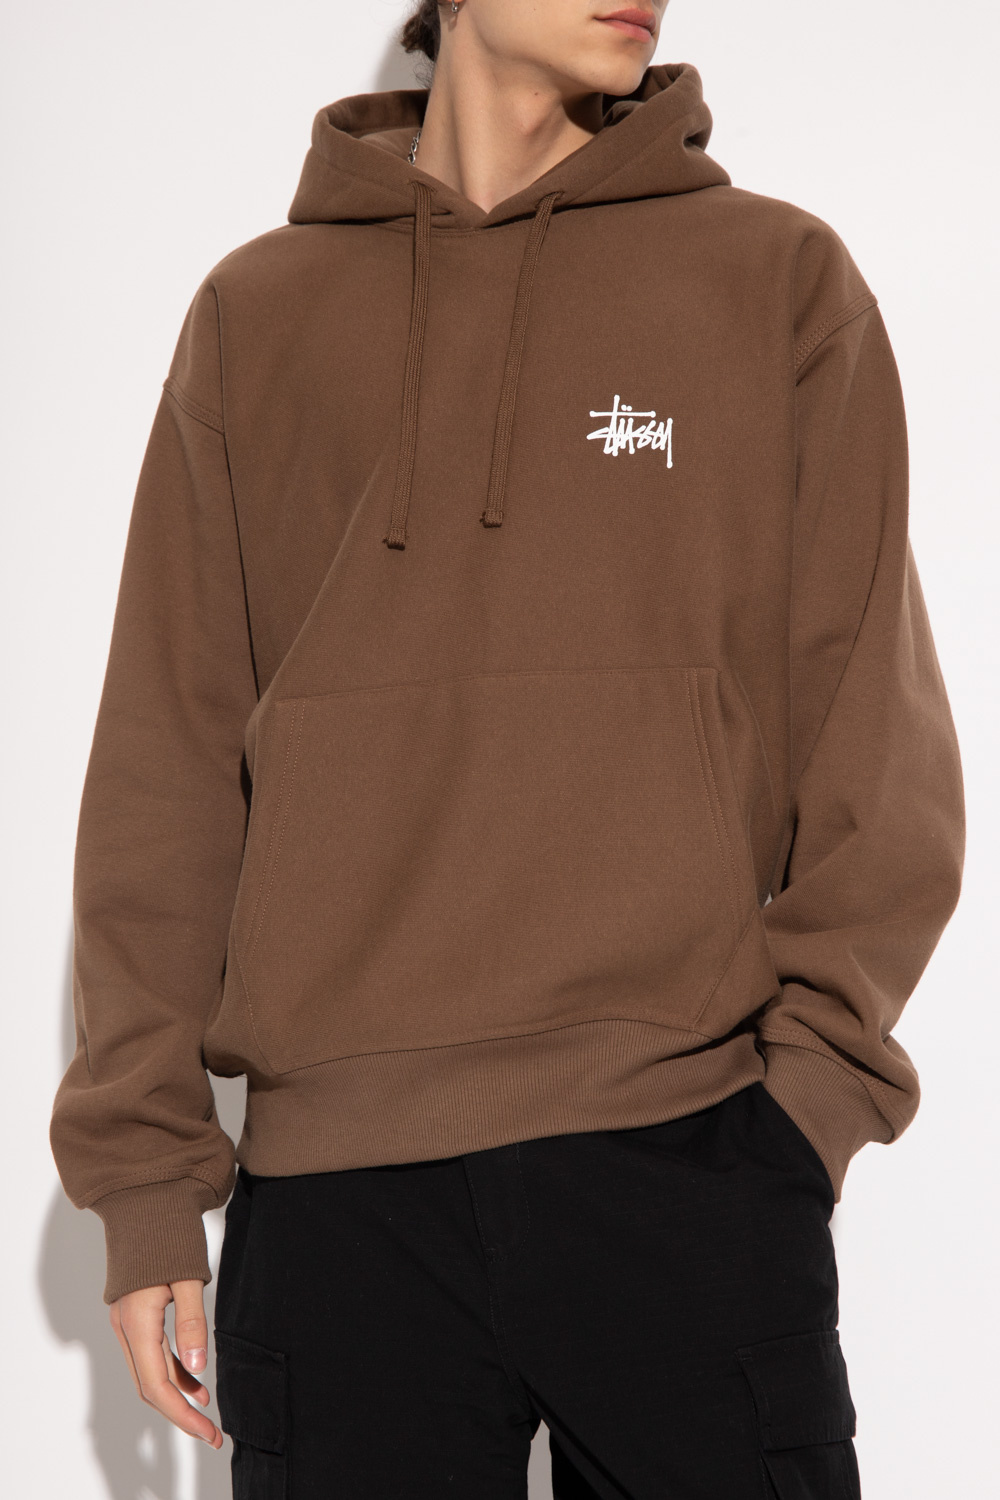 logo-print pullover hoodie, Stüssy